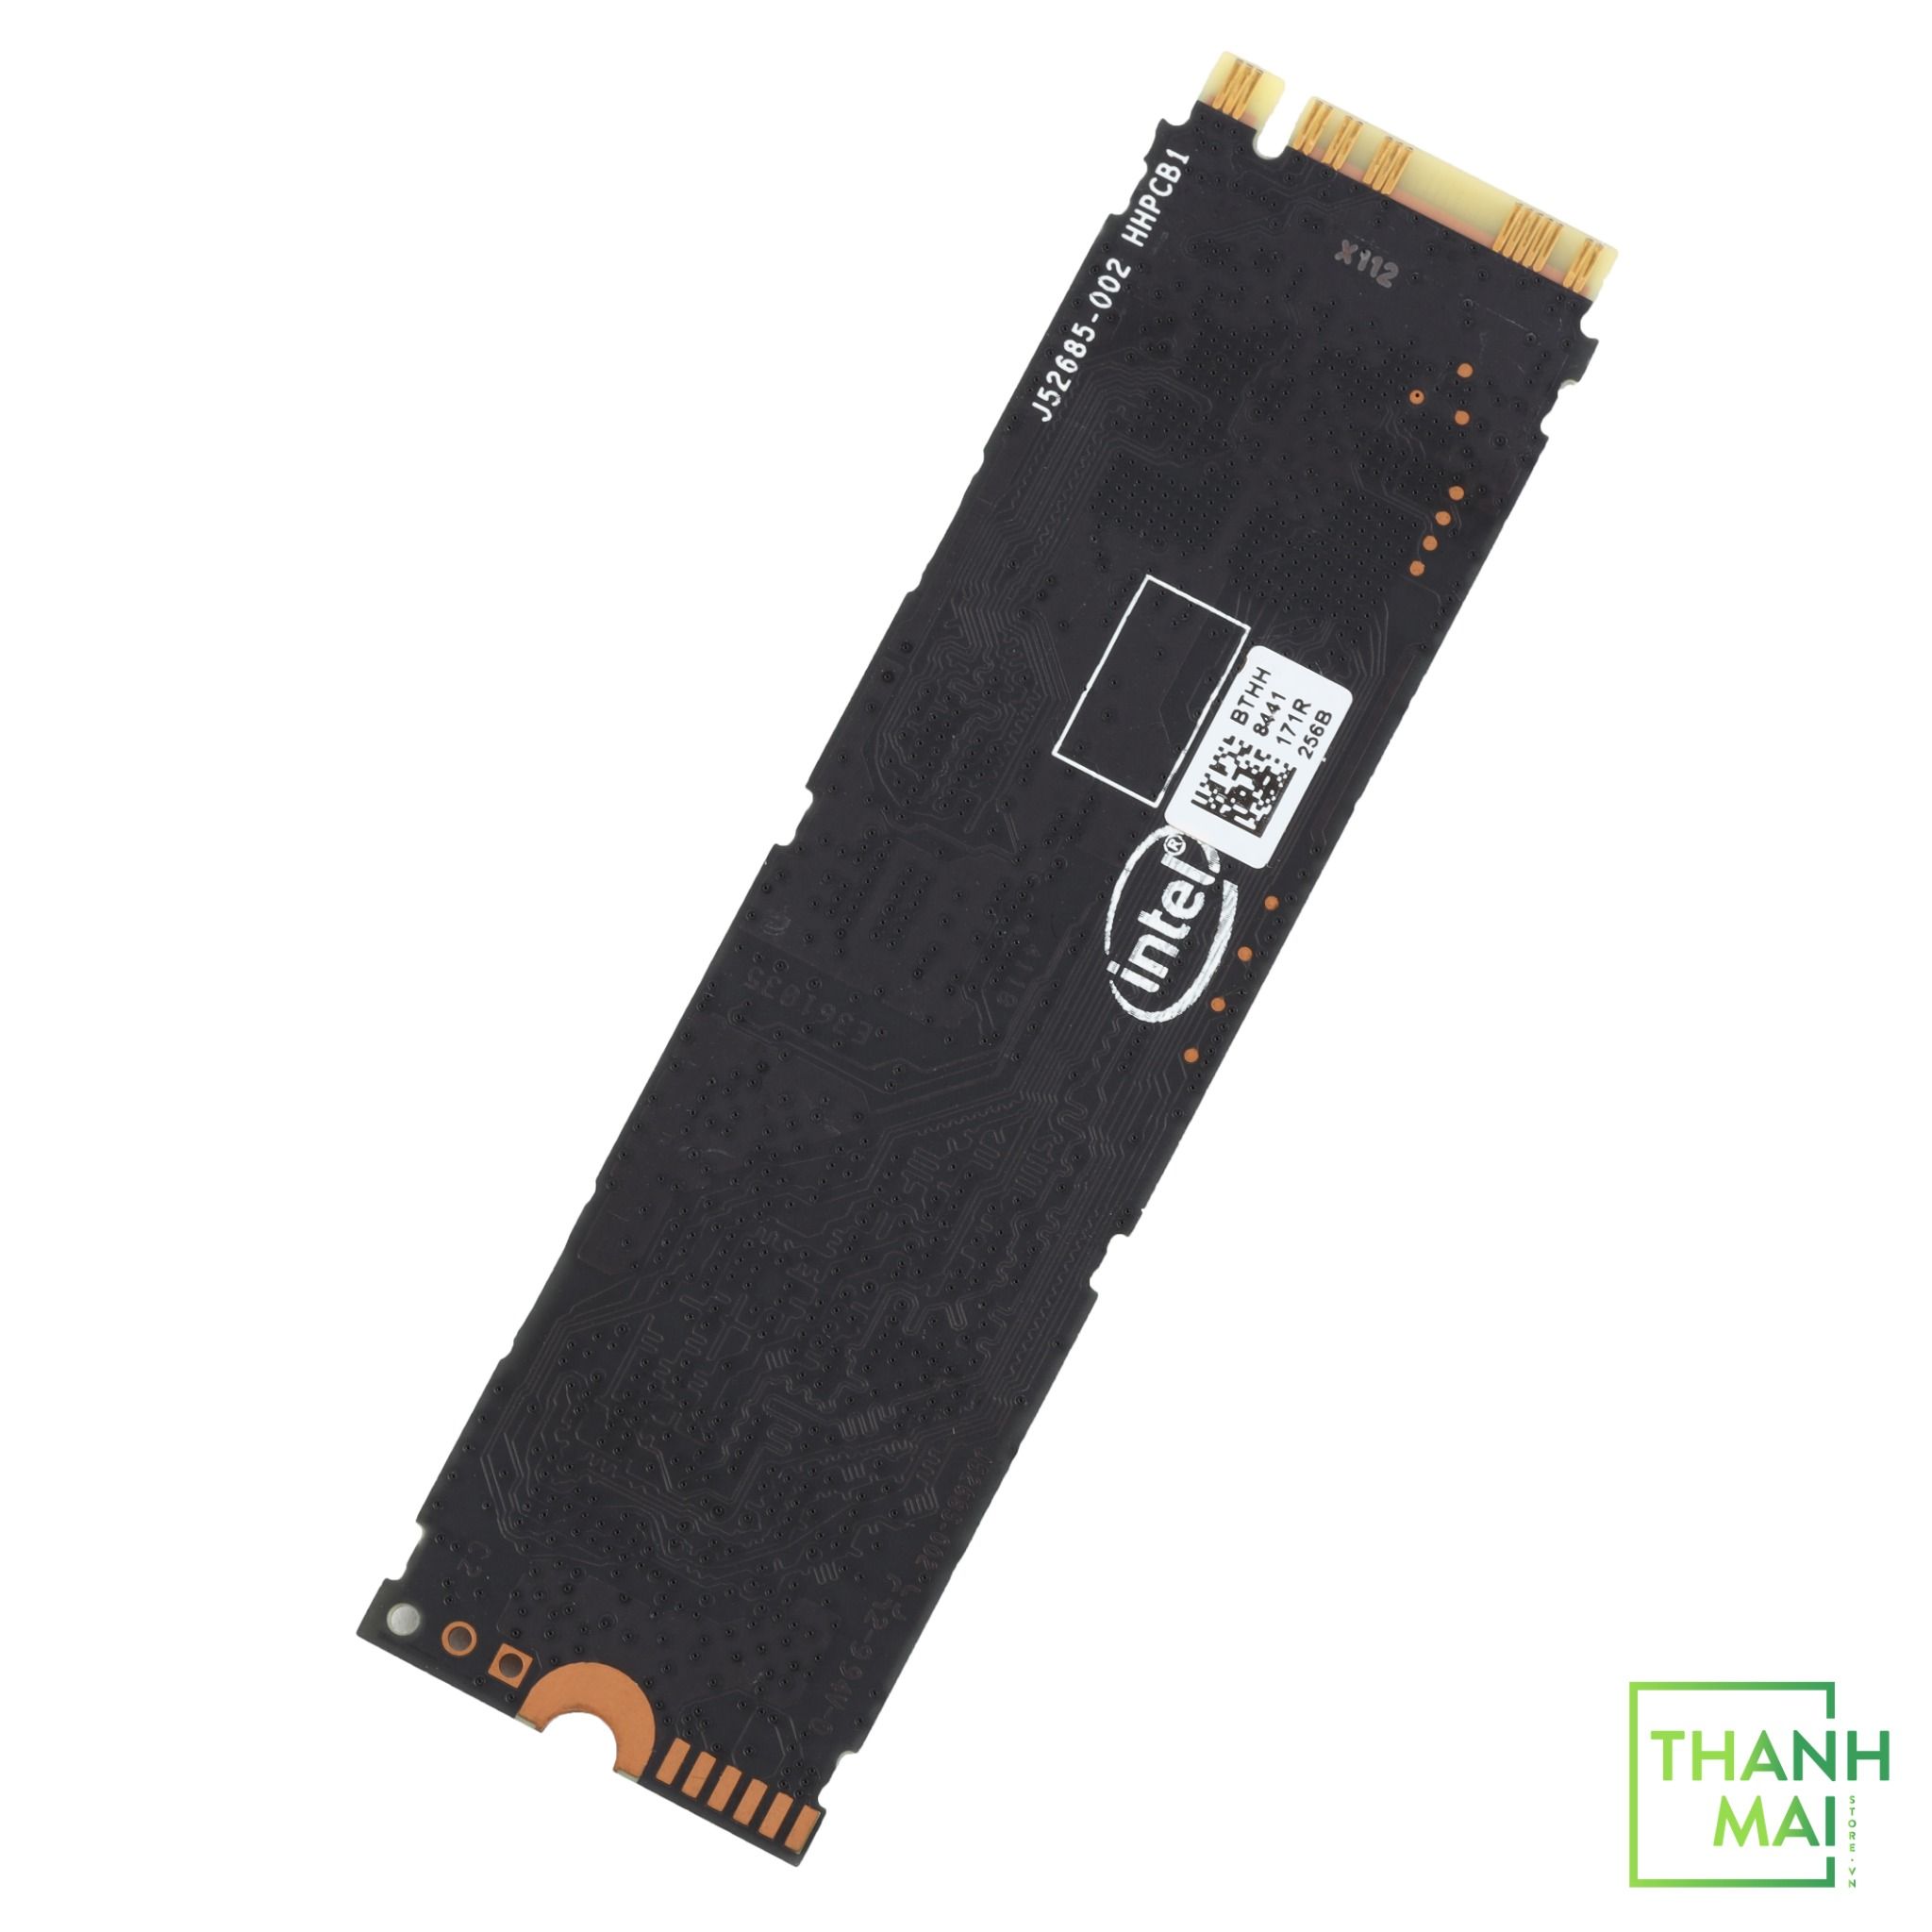 Ổ cứng Intel Pro 7600p Series PCIe NVMe 256GB SSDPEKKF256G8L - Thanhmaistore